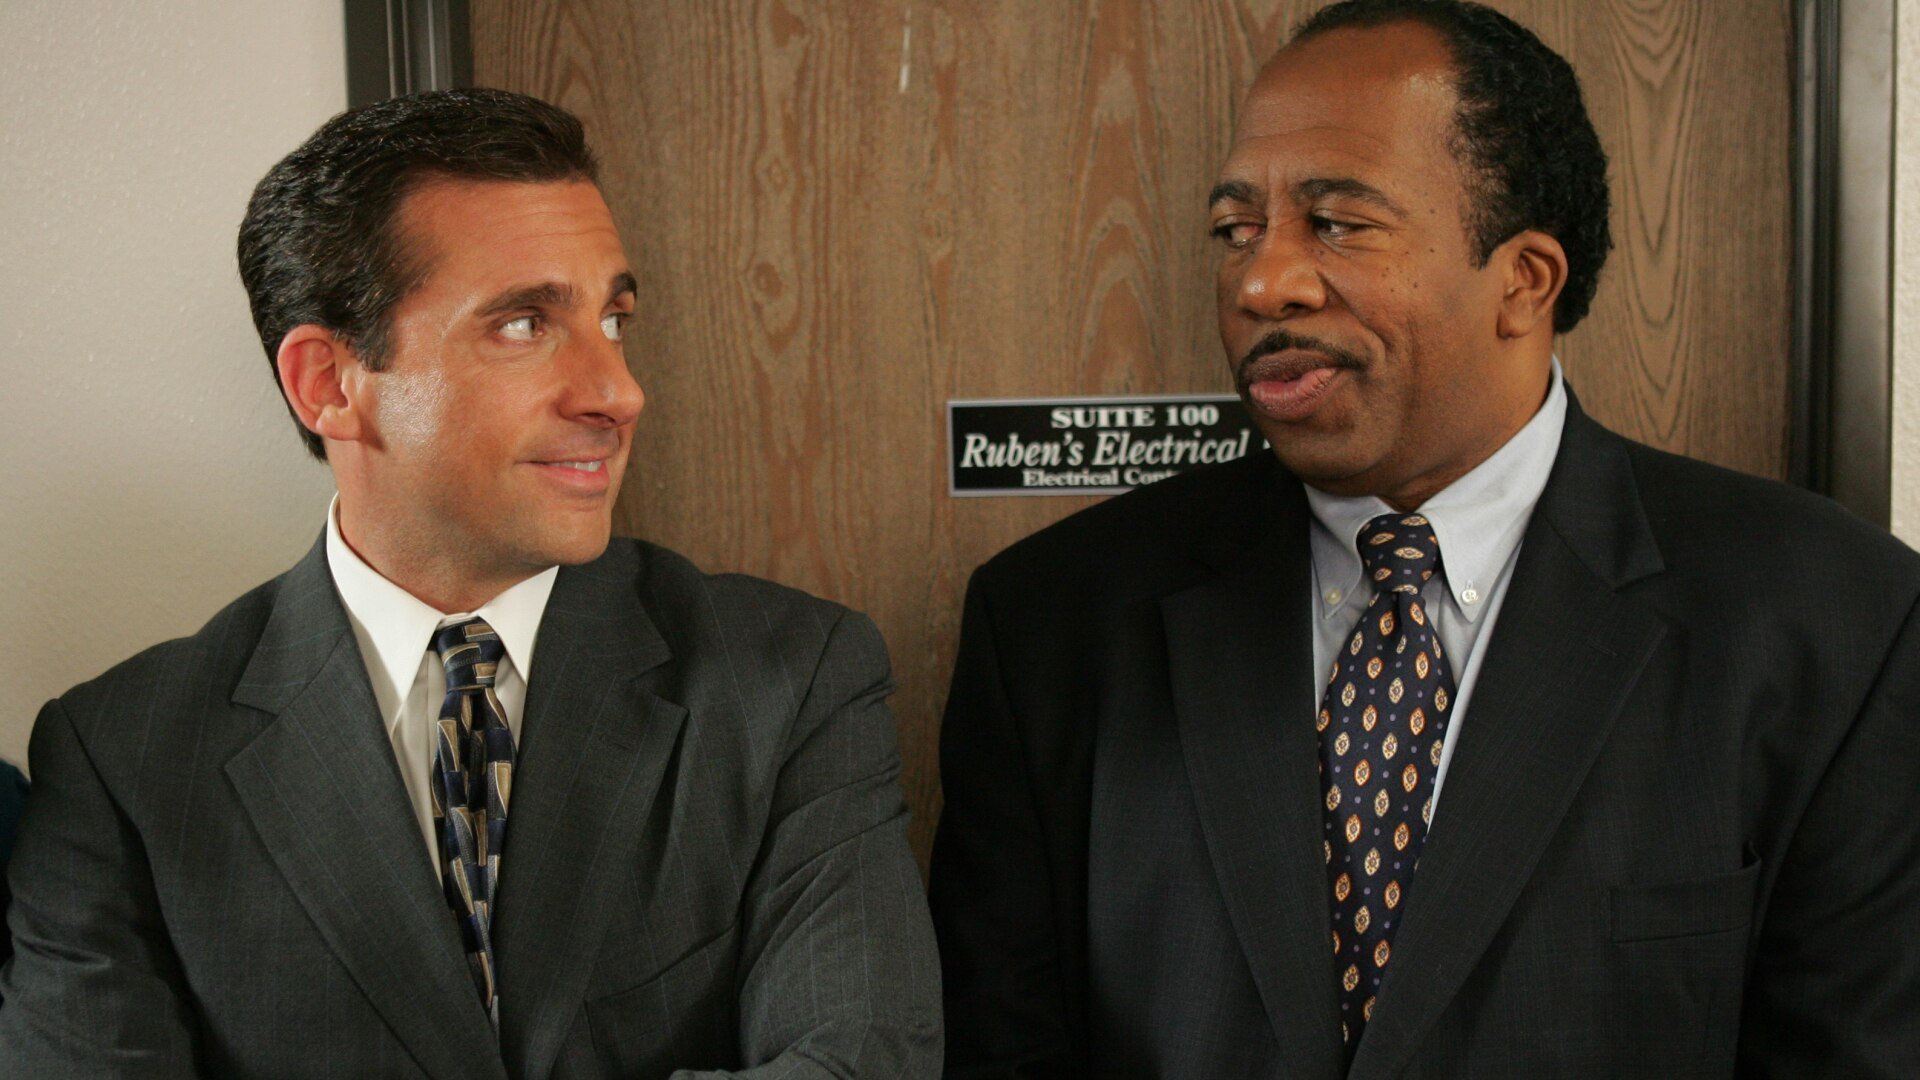 Watch The Office (US) Season 1 Episode 1 Online - Stream Full Episodes